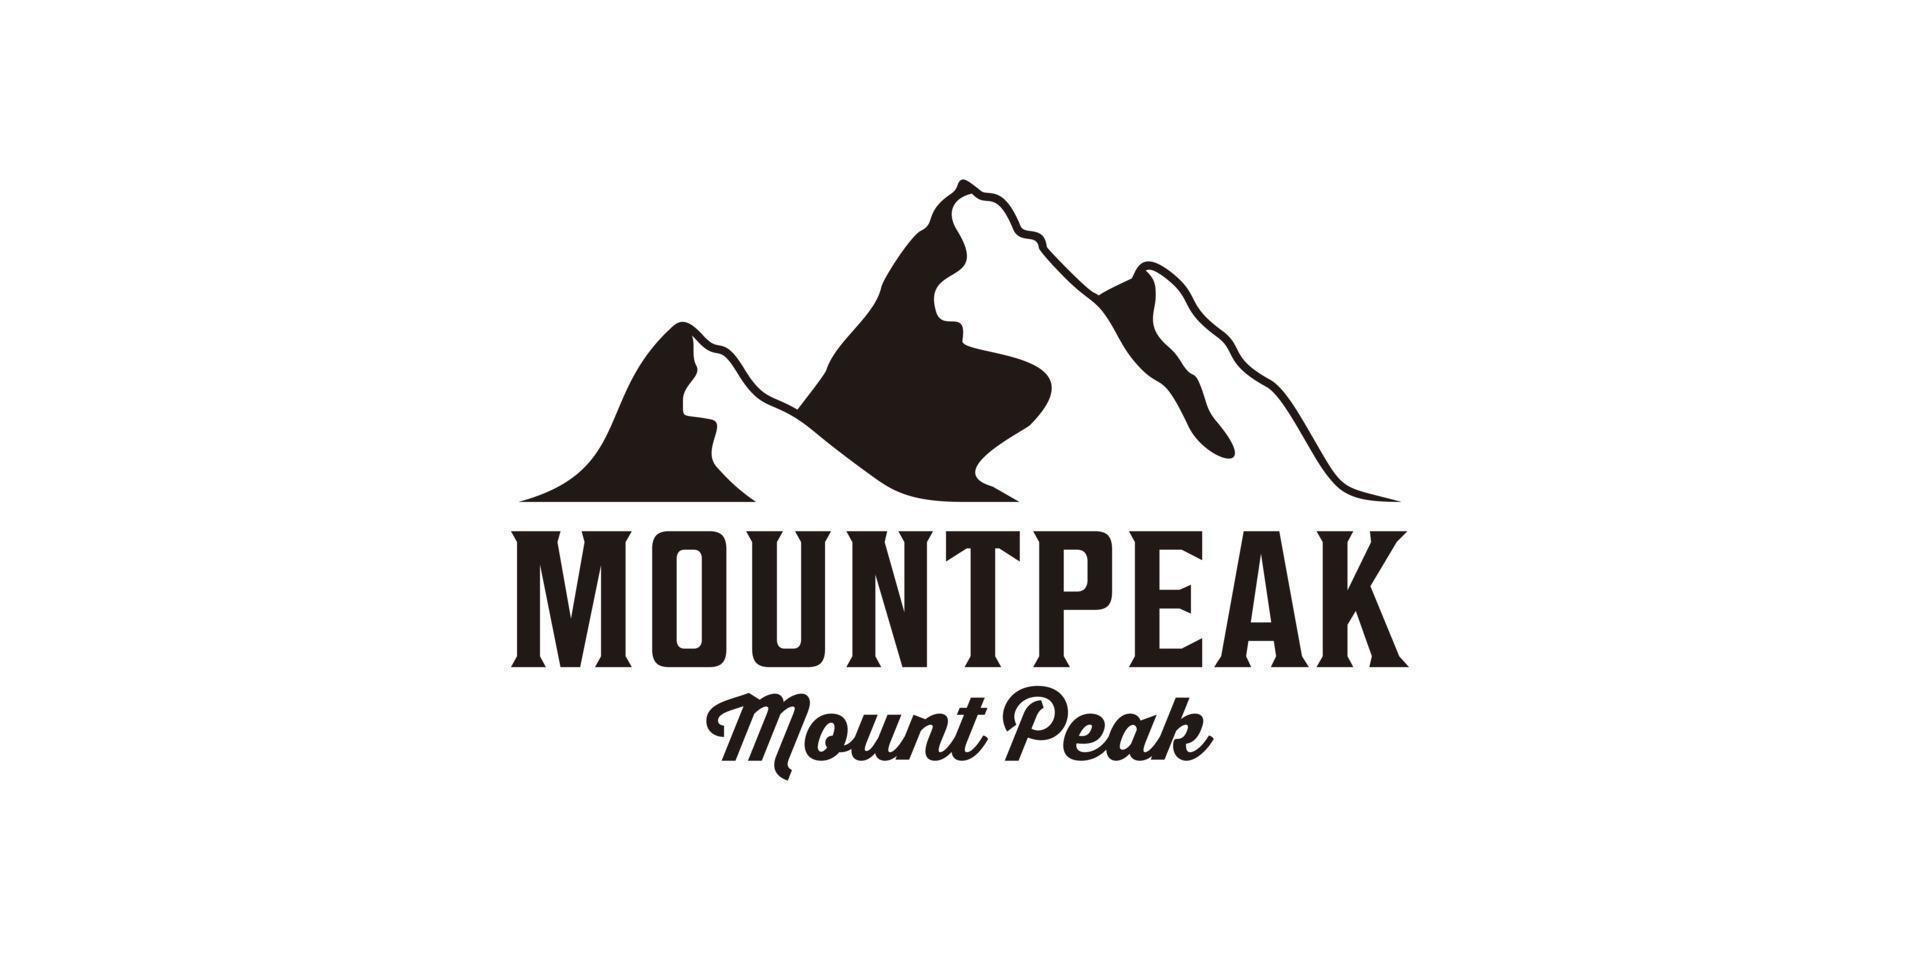 Vintage hipster mountain peak landscape silhouette logo design vector